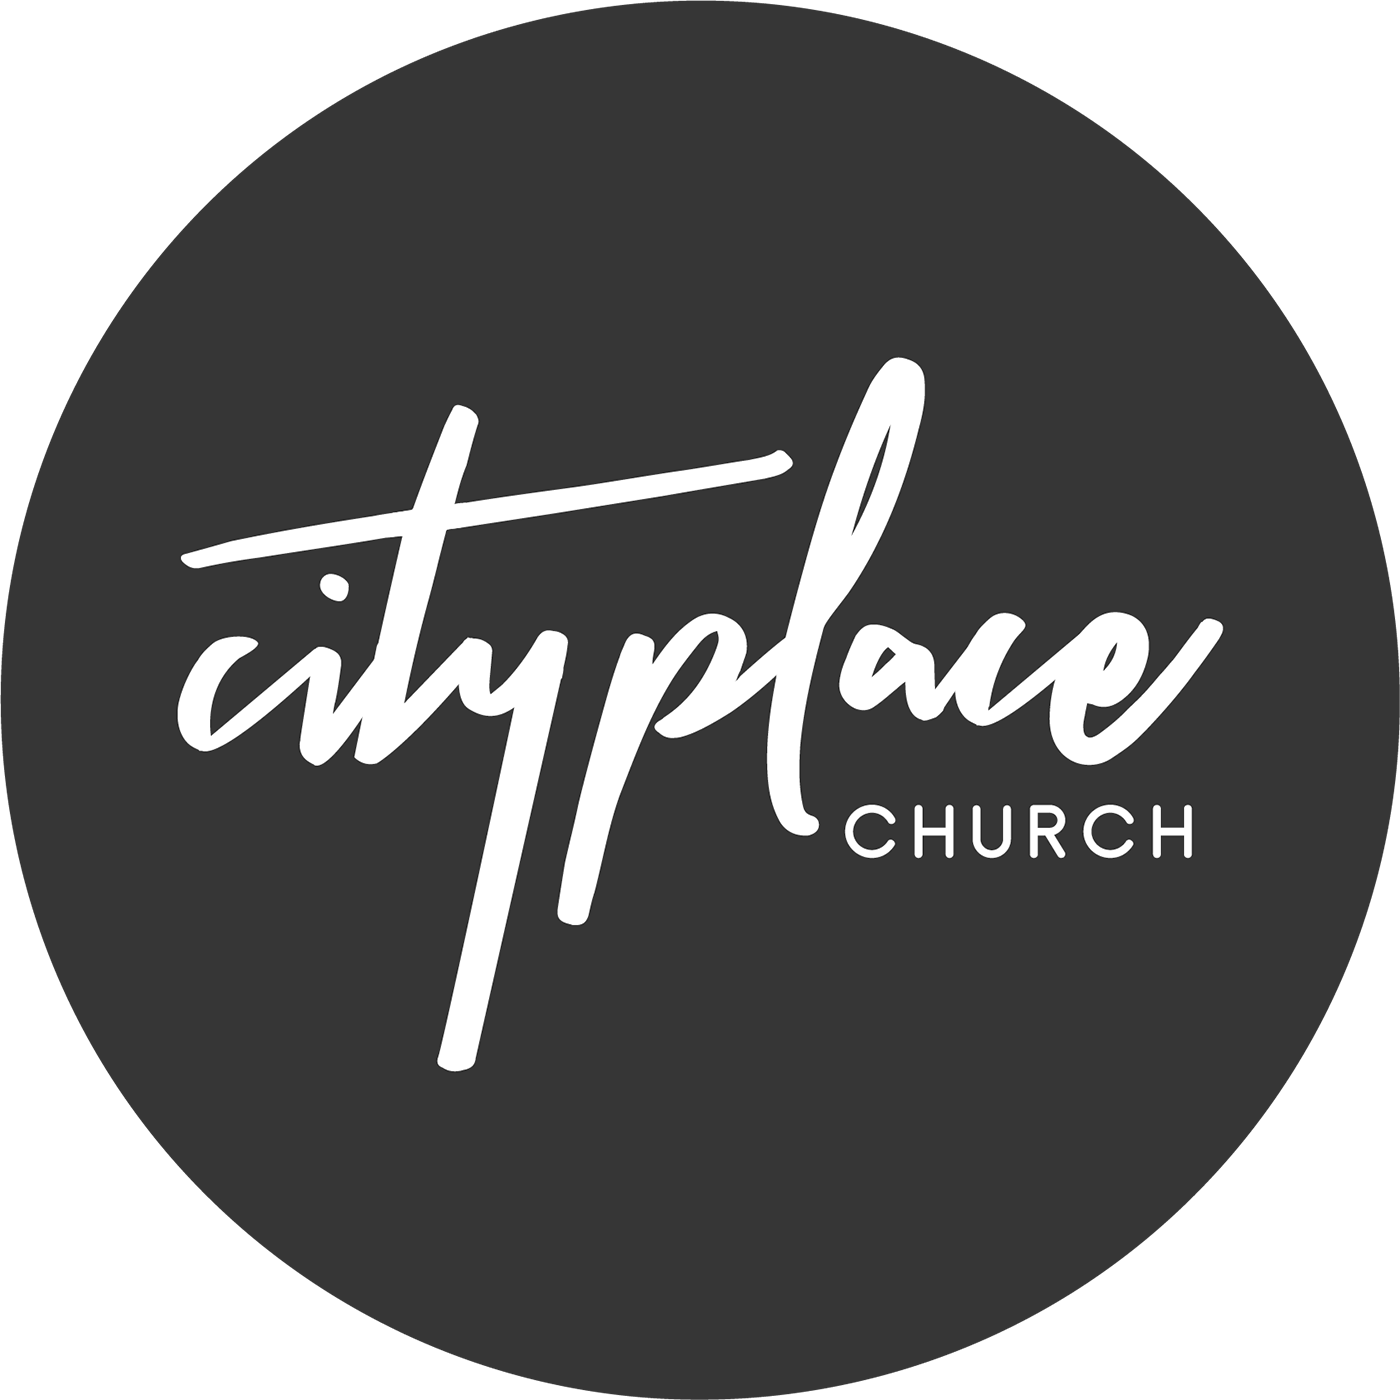 City Place Church Audio Podcast